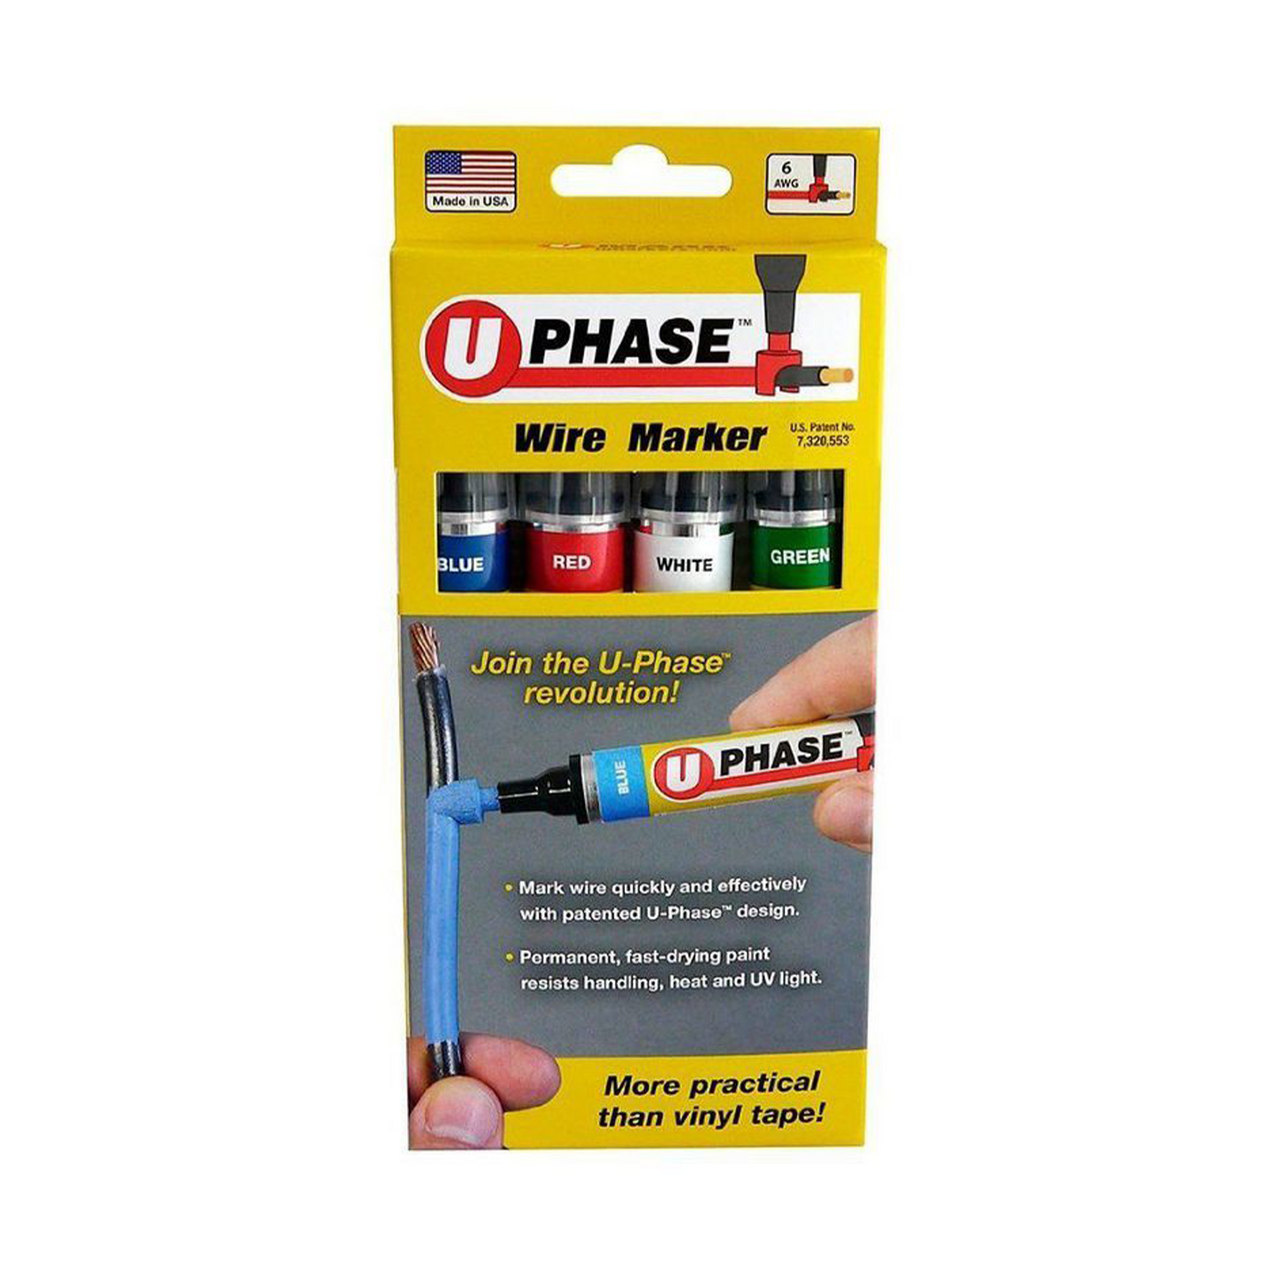 U-Phase® Wire Marker Pack - Blue, Red, White, Green - U-Mark, Inc